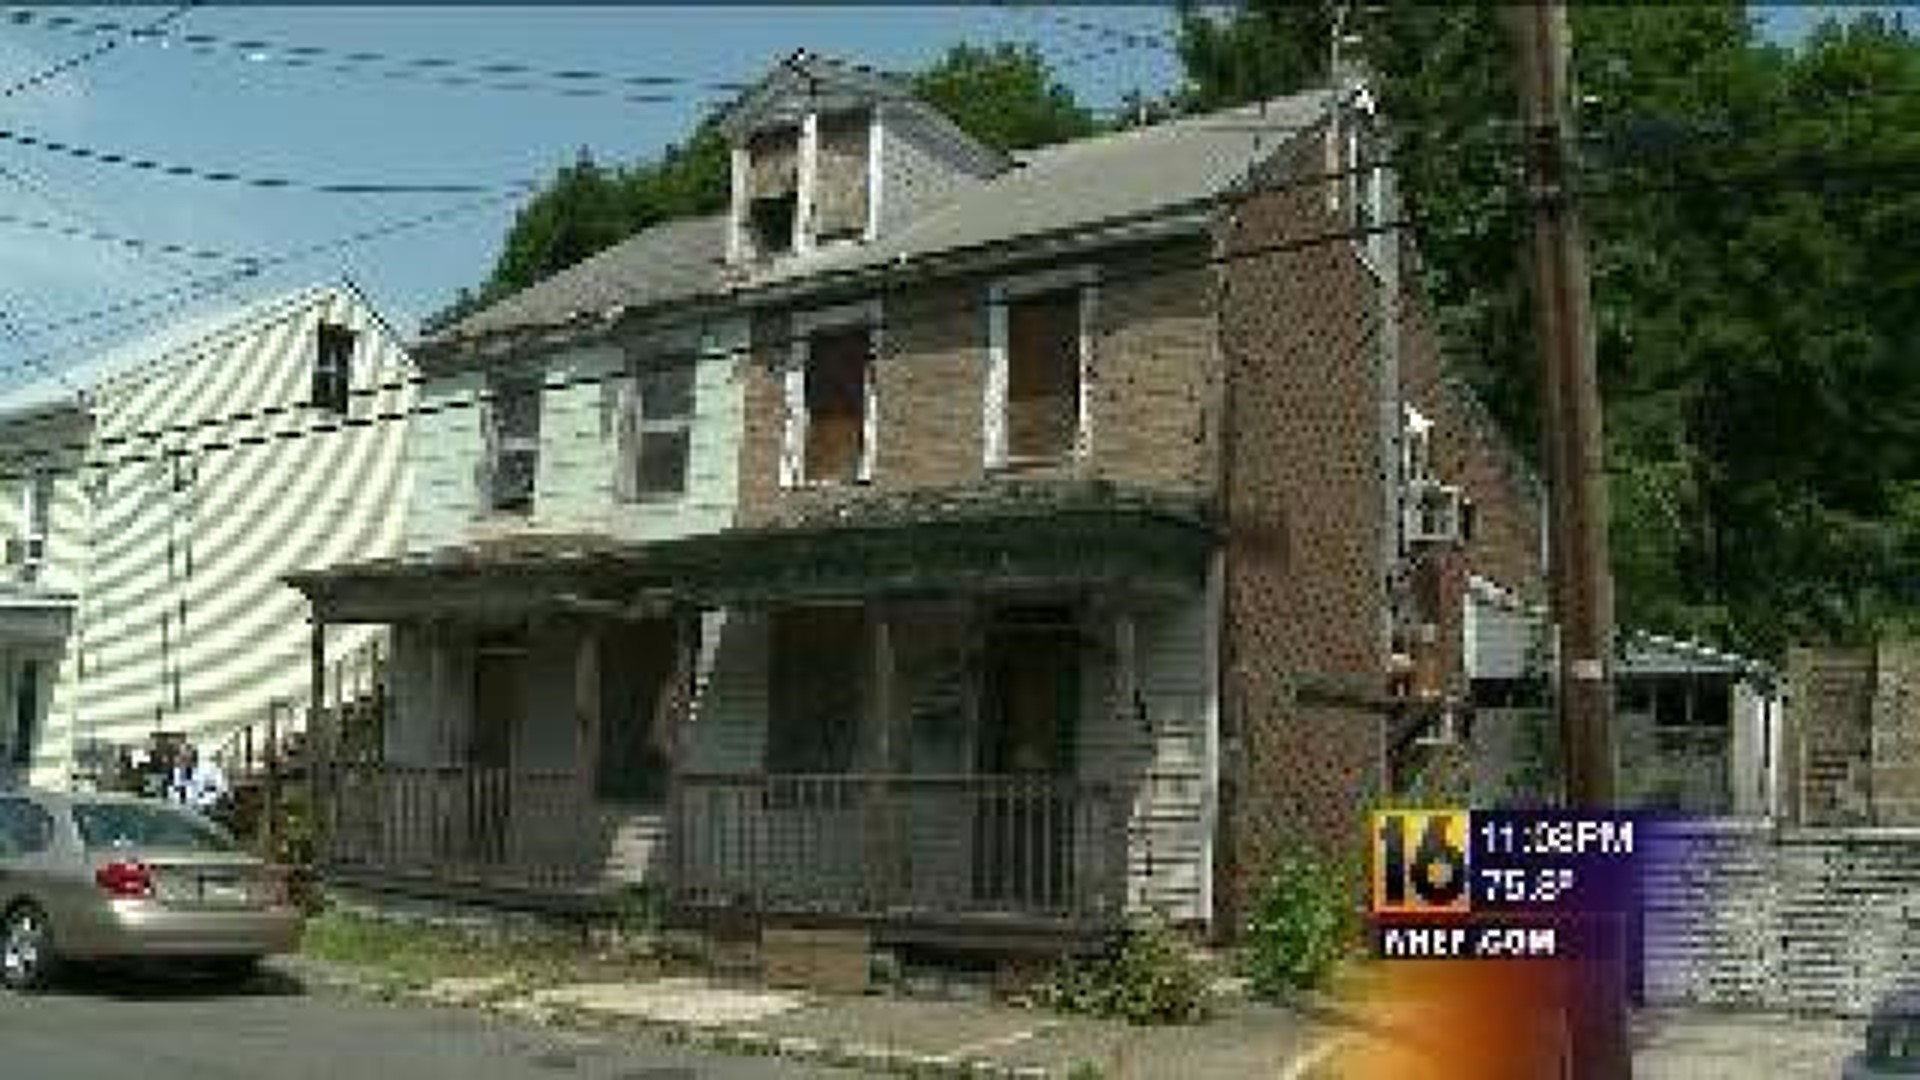 Neighbors Demand Action on Abandoned House